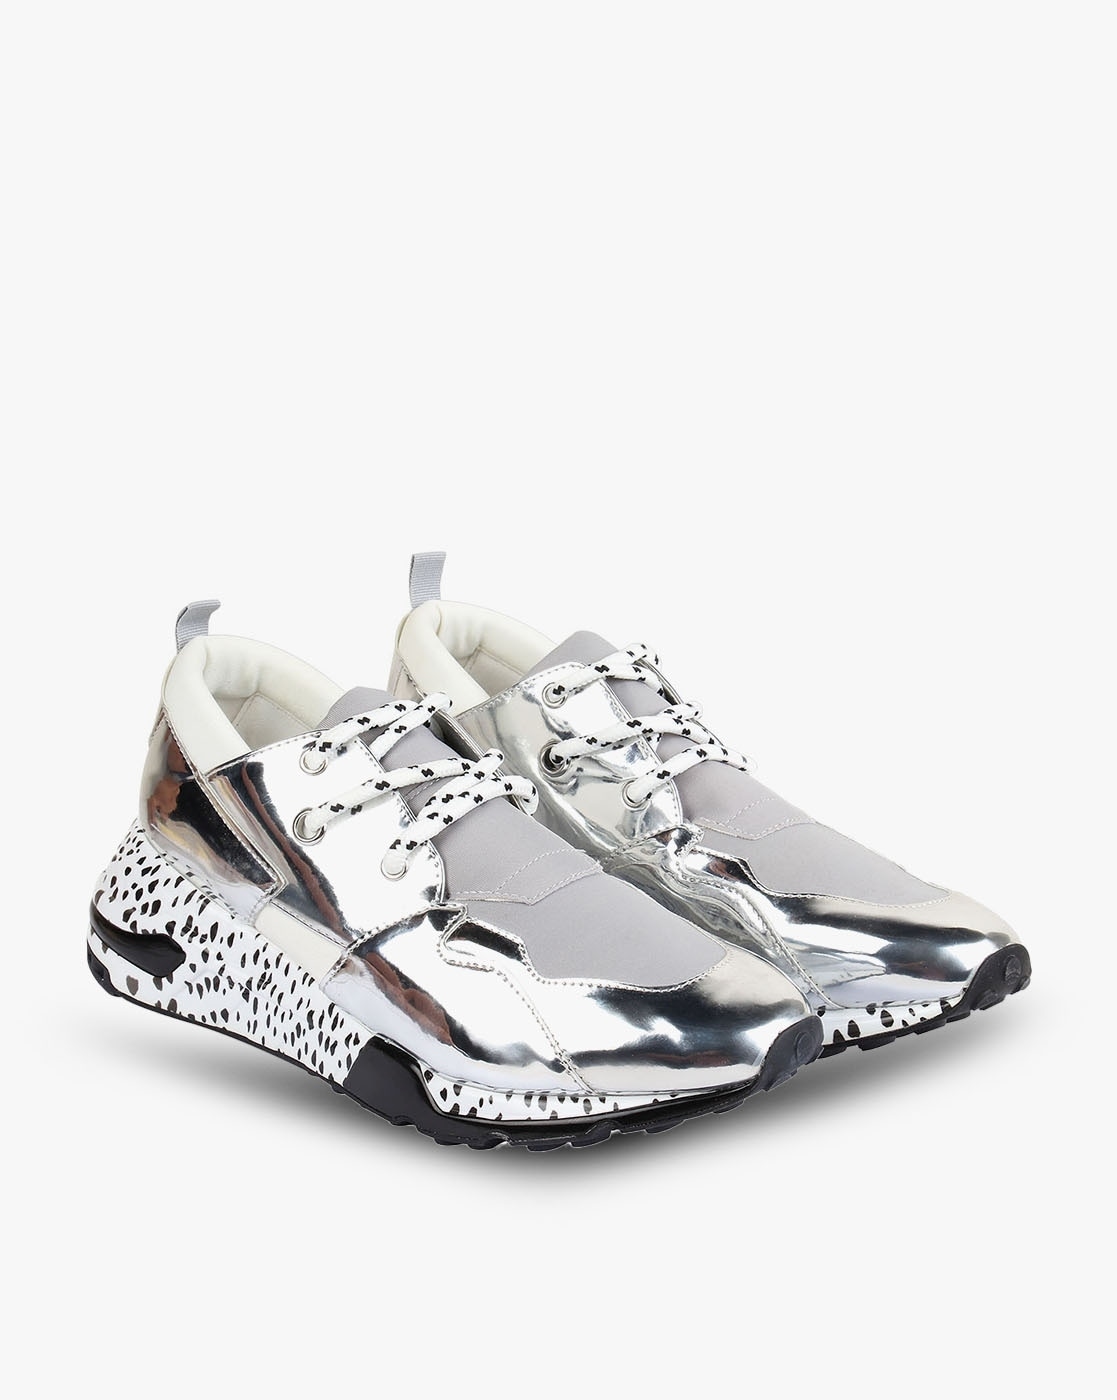 steve madden silver sneakers